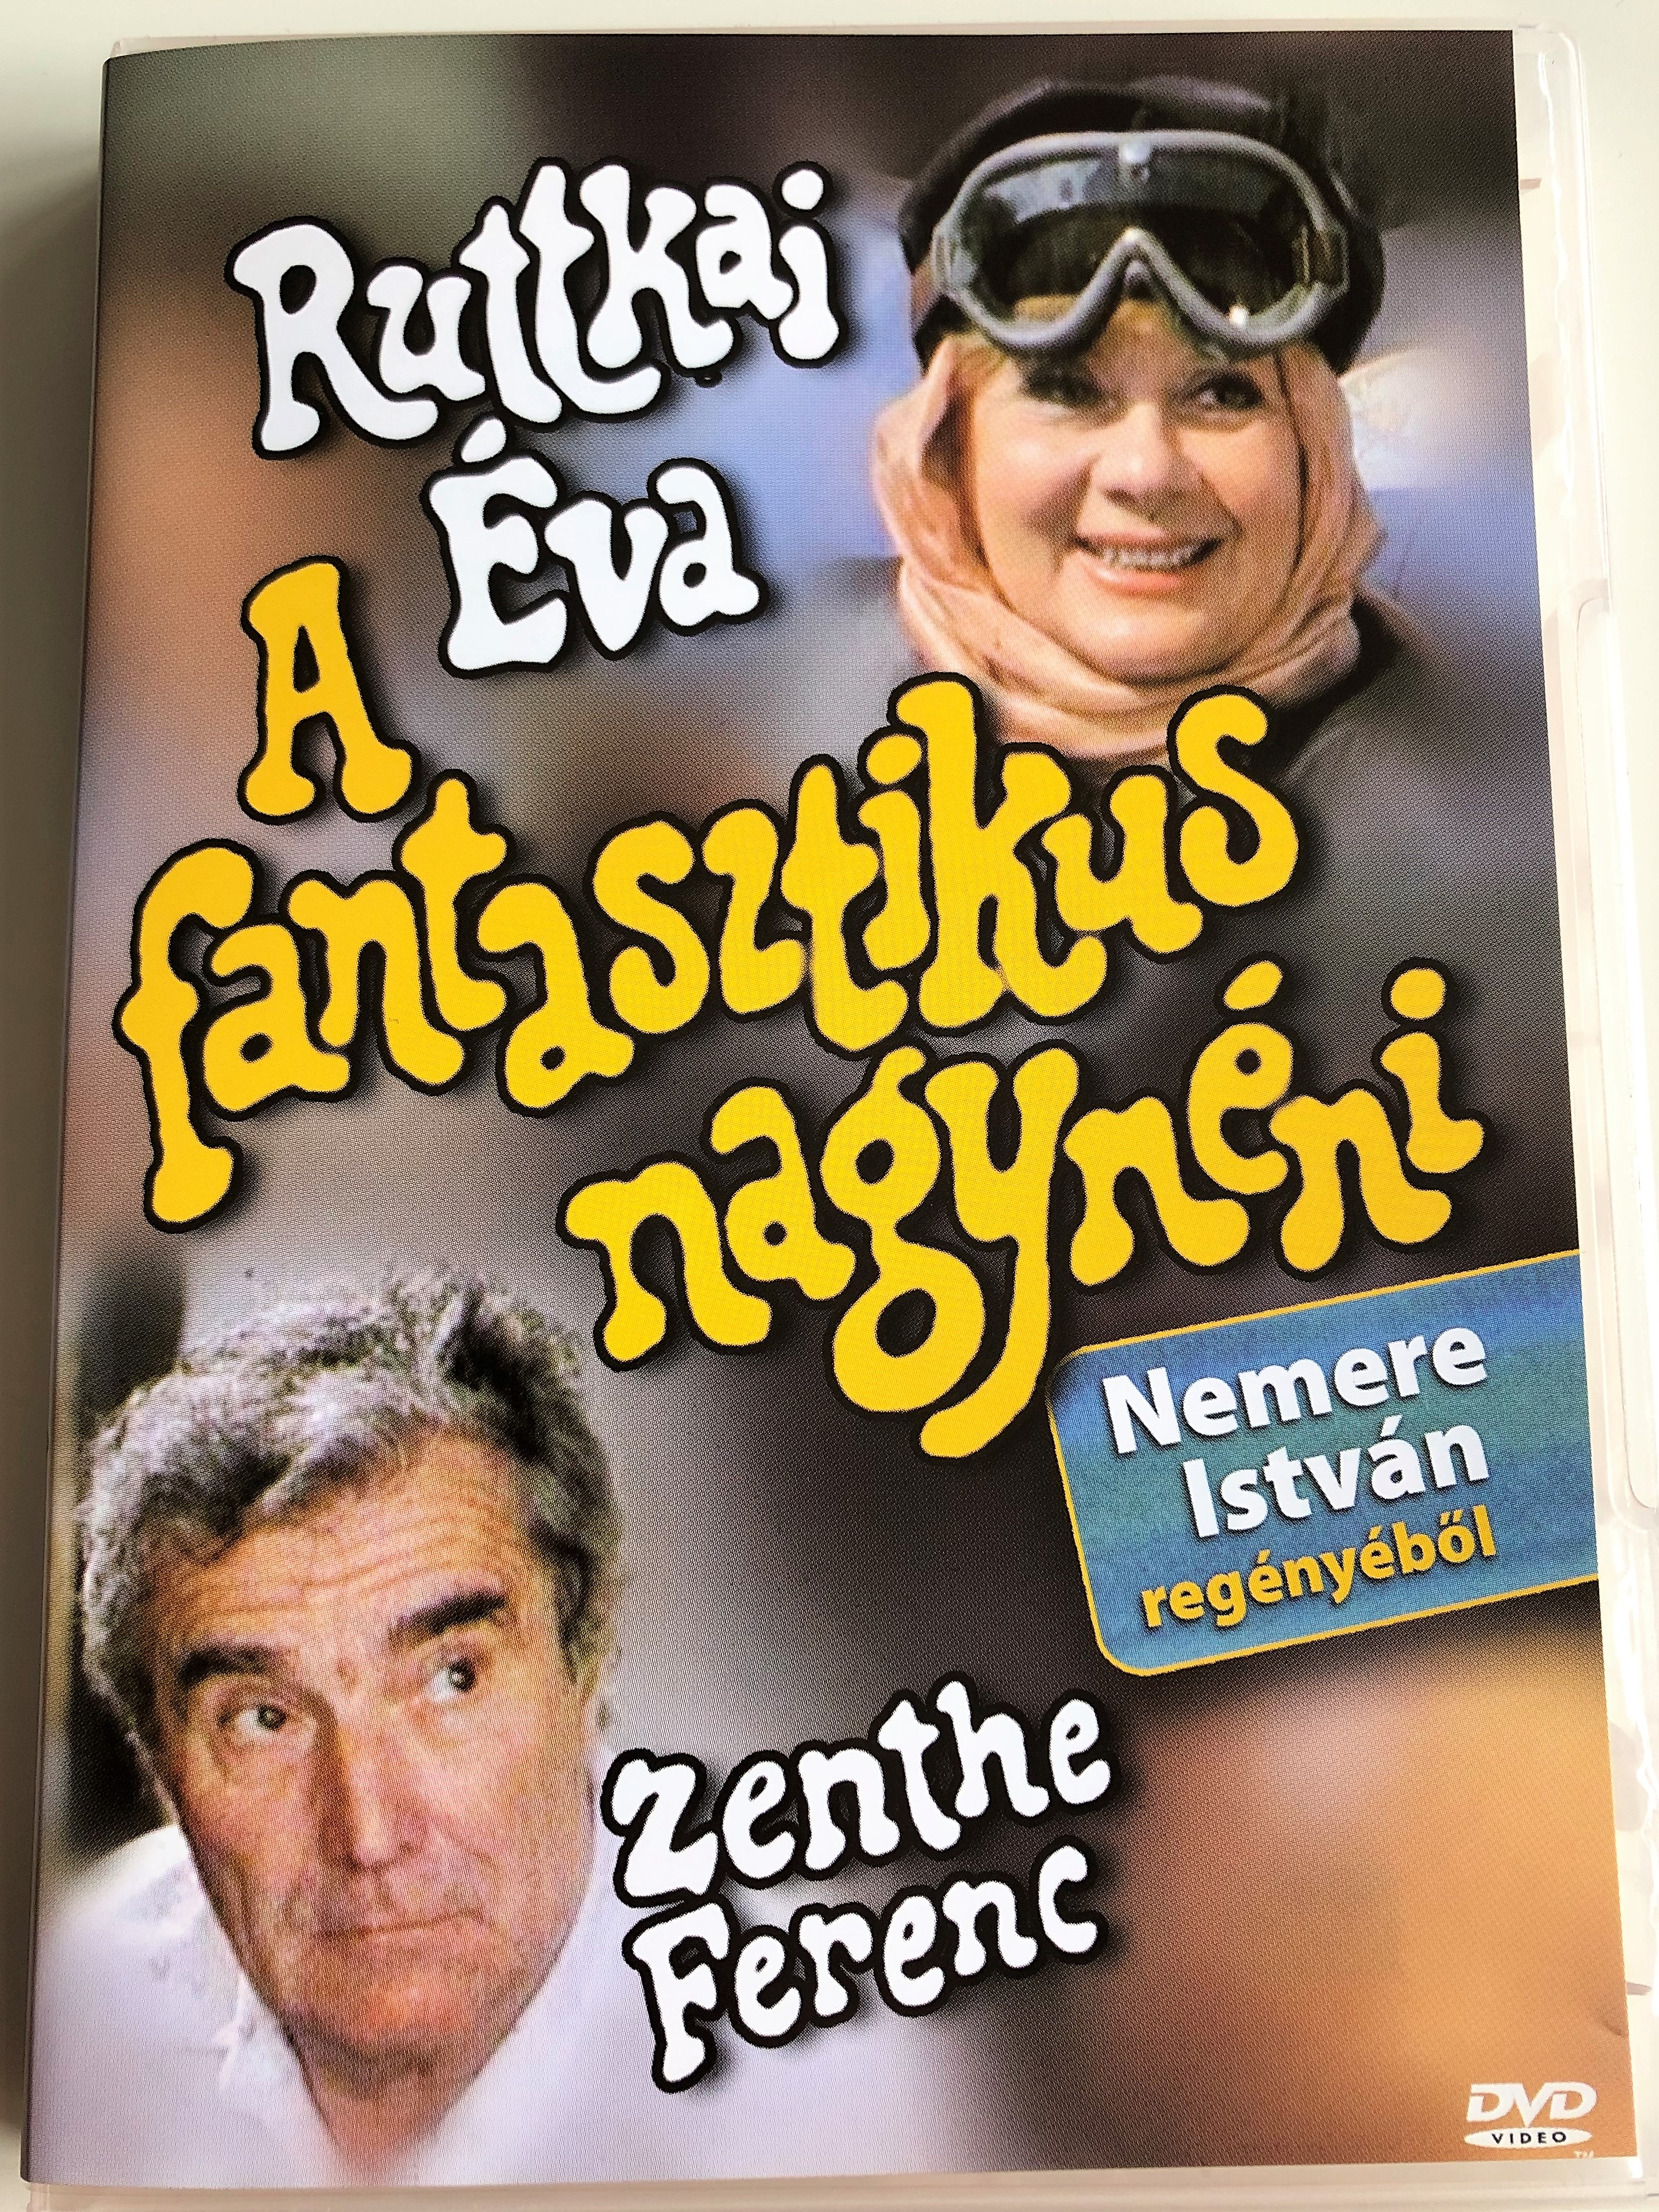 a-fantasztikus-nagyn-ni-dvd-1986-the-fantastic-aunt-directed-by-katkics-ilona-starring-ruttkay-va-zenthe-ferenc-nemere-istv-n-reg-ny-b-l-1-.jpg